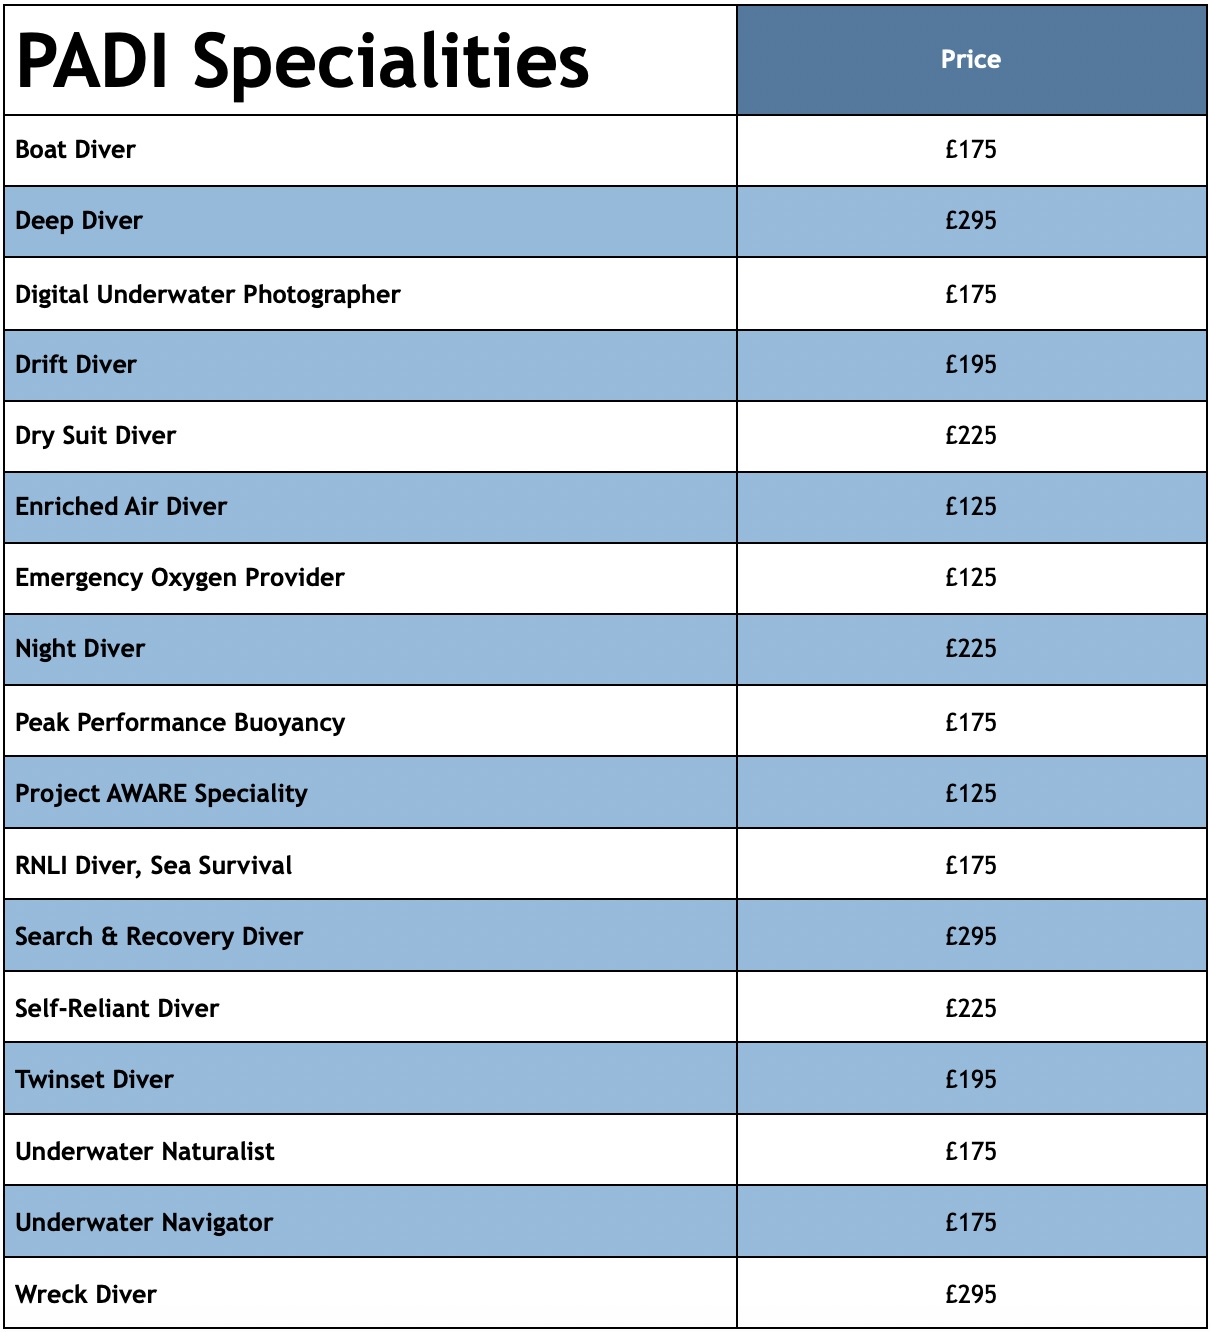 PADI Speciality Price List